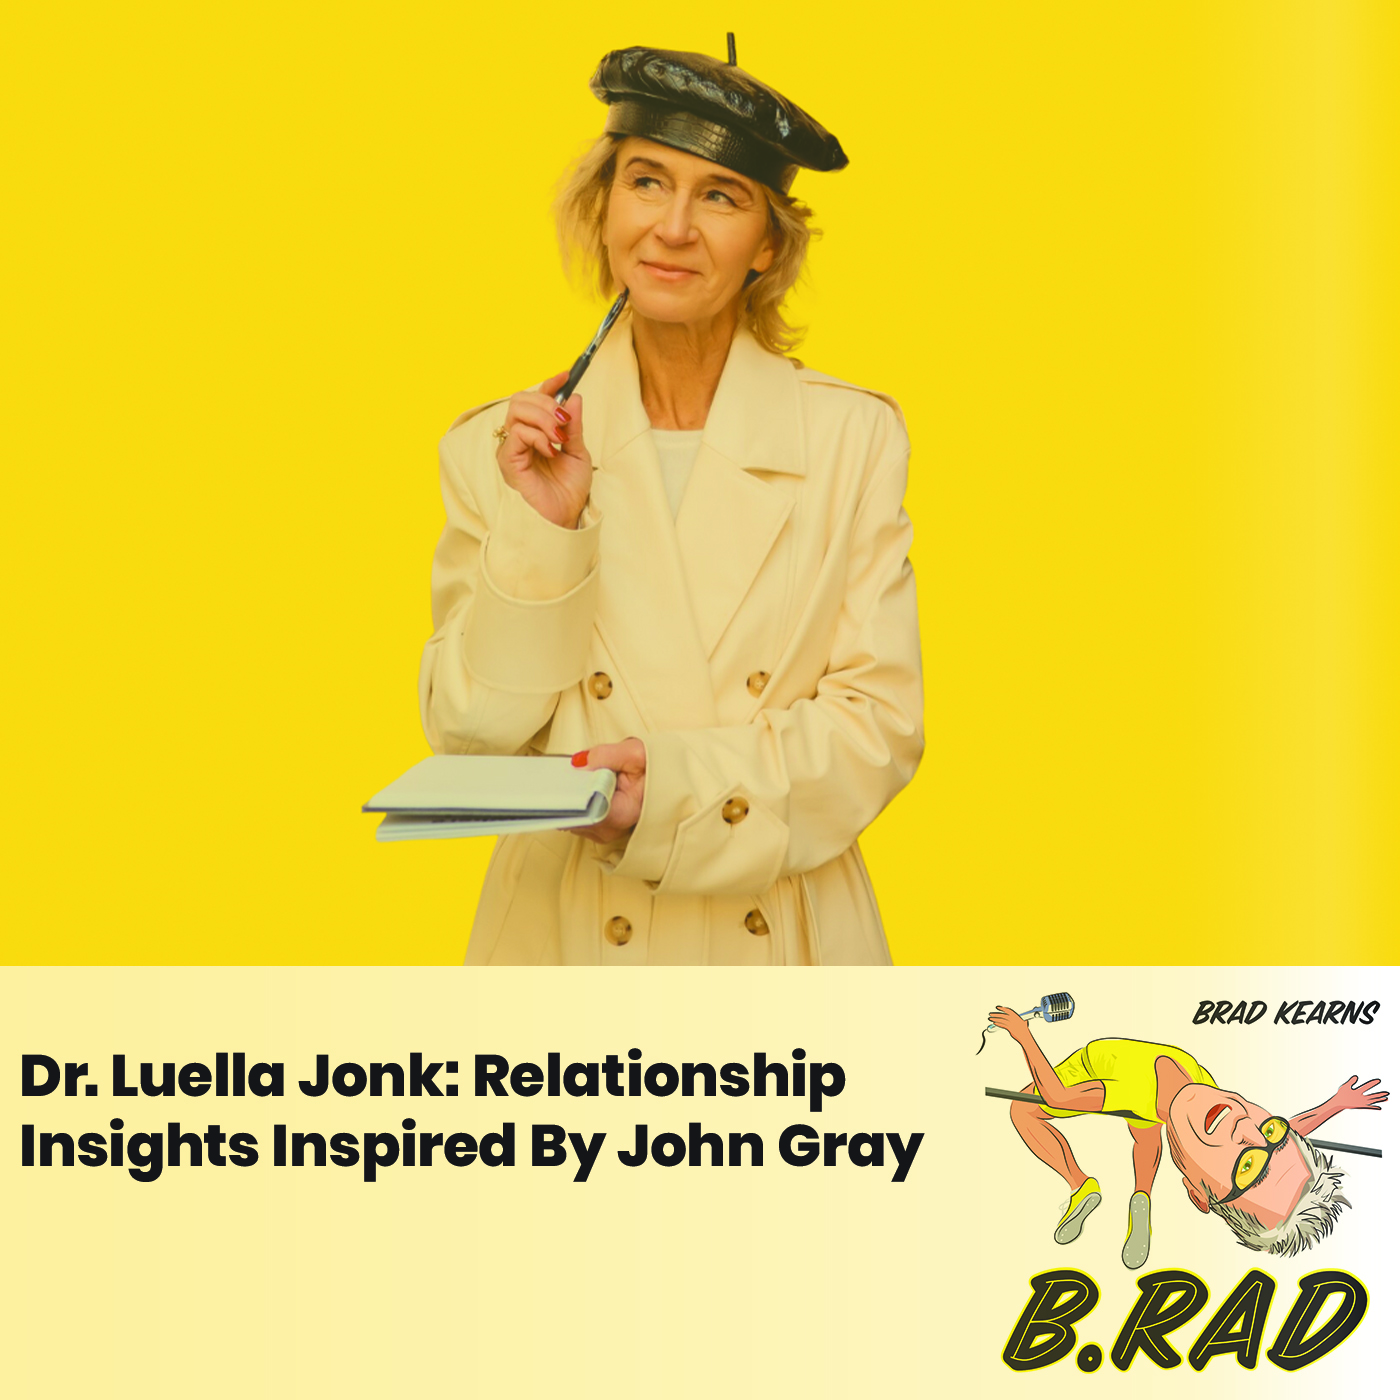 Dr. Luella Jonk: Relationship Insights Inspired By John Gray